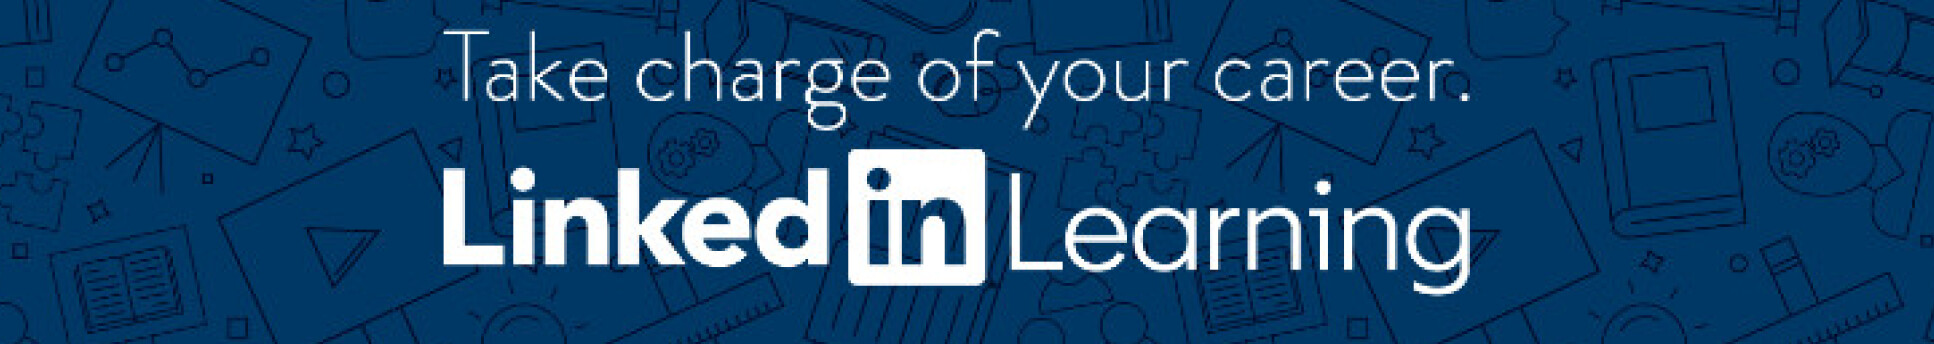 Promotional image for LinkedIn Learning